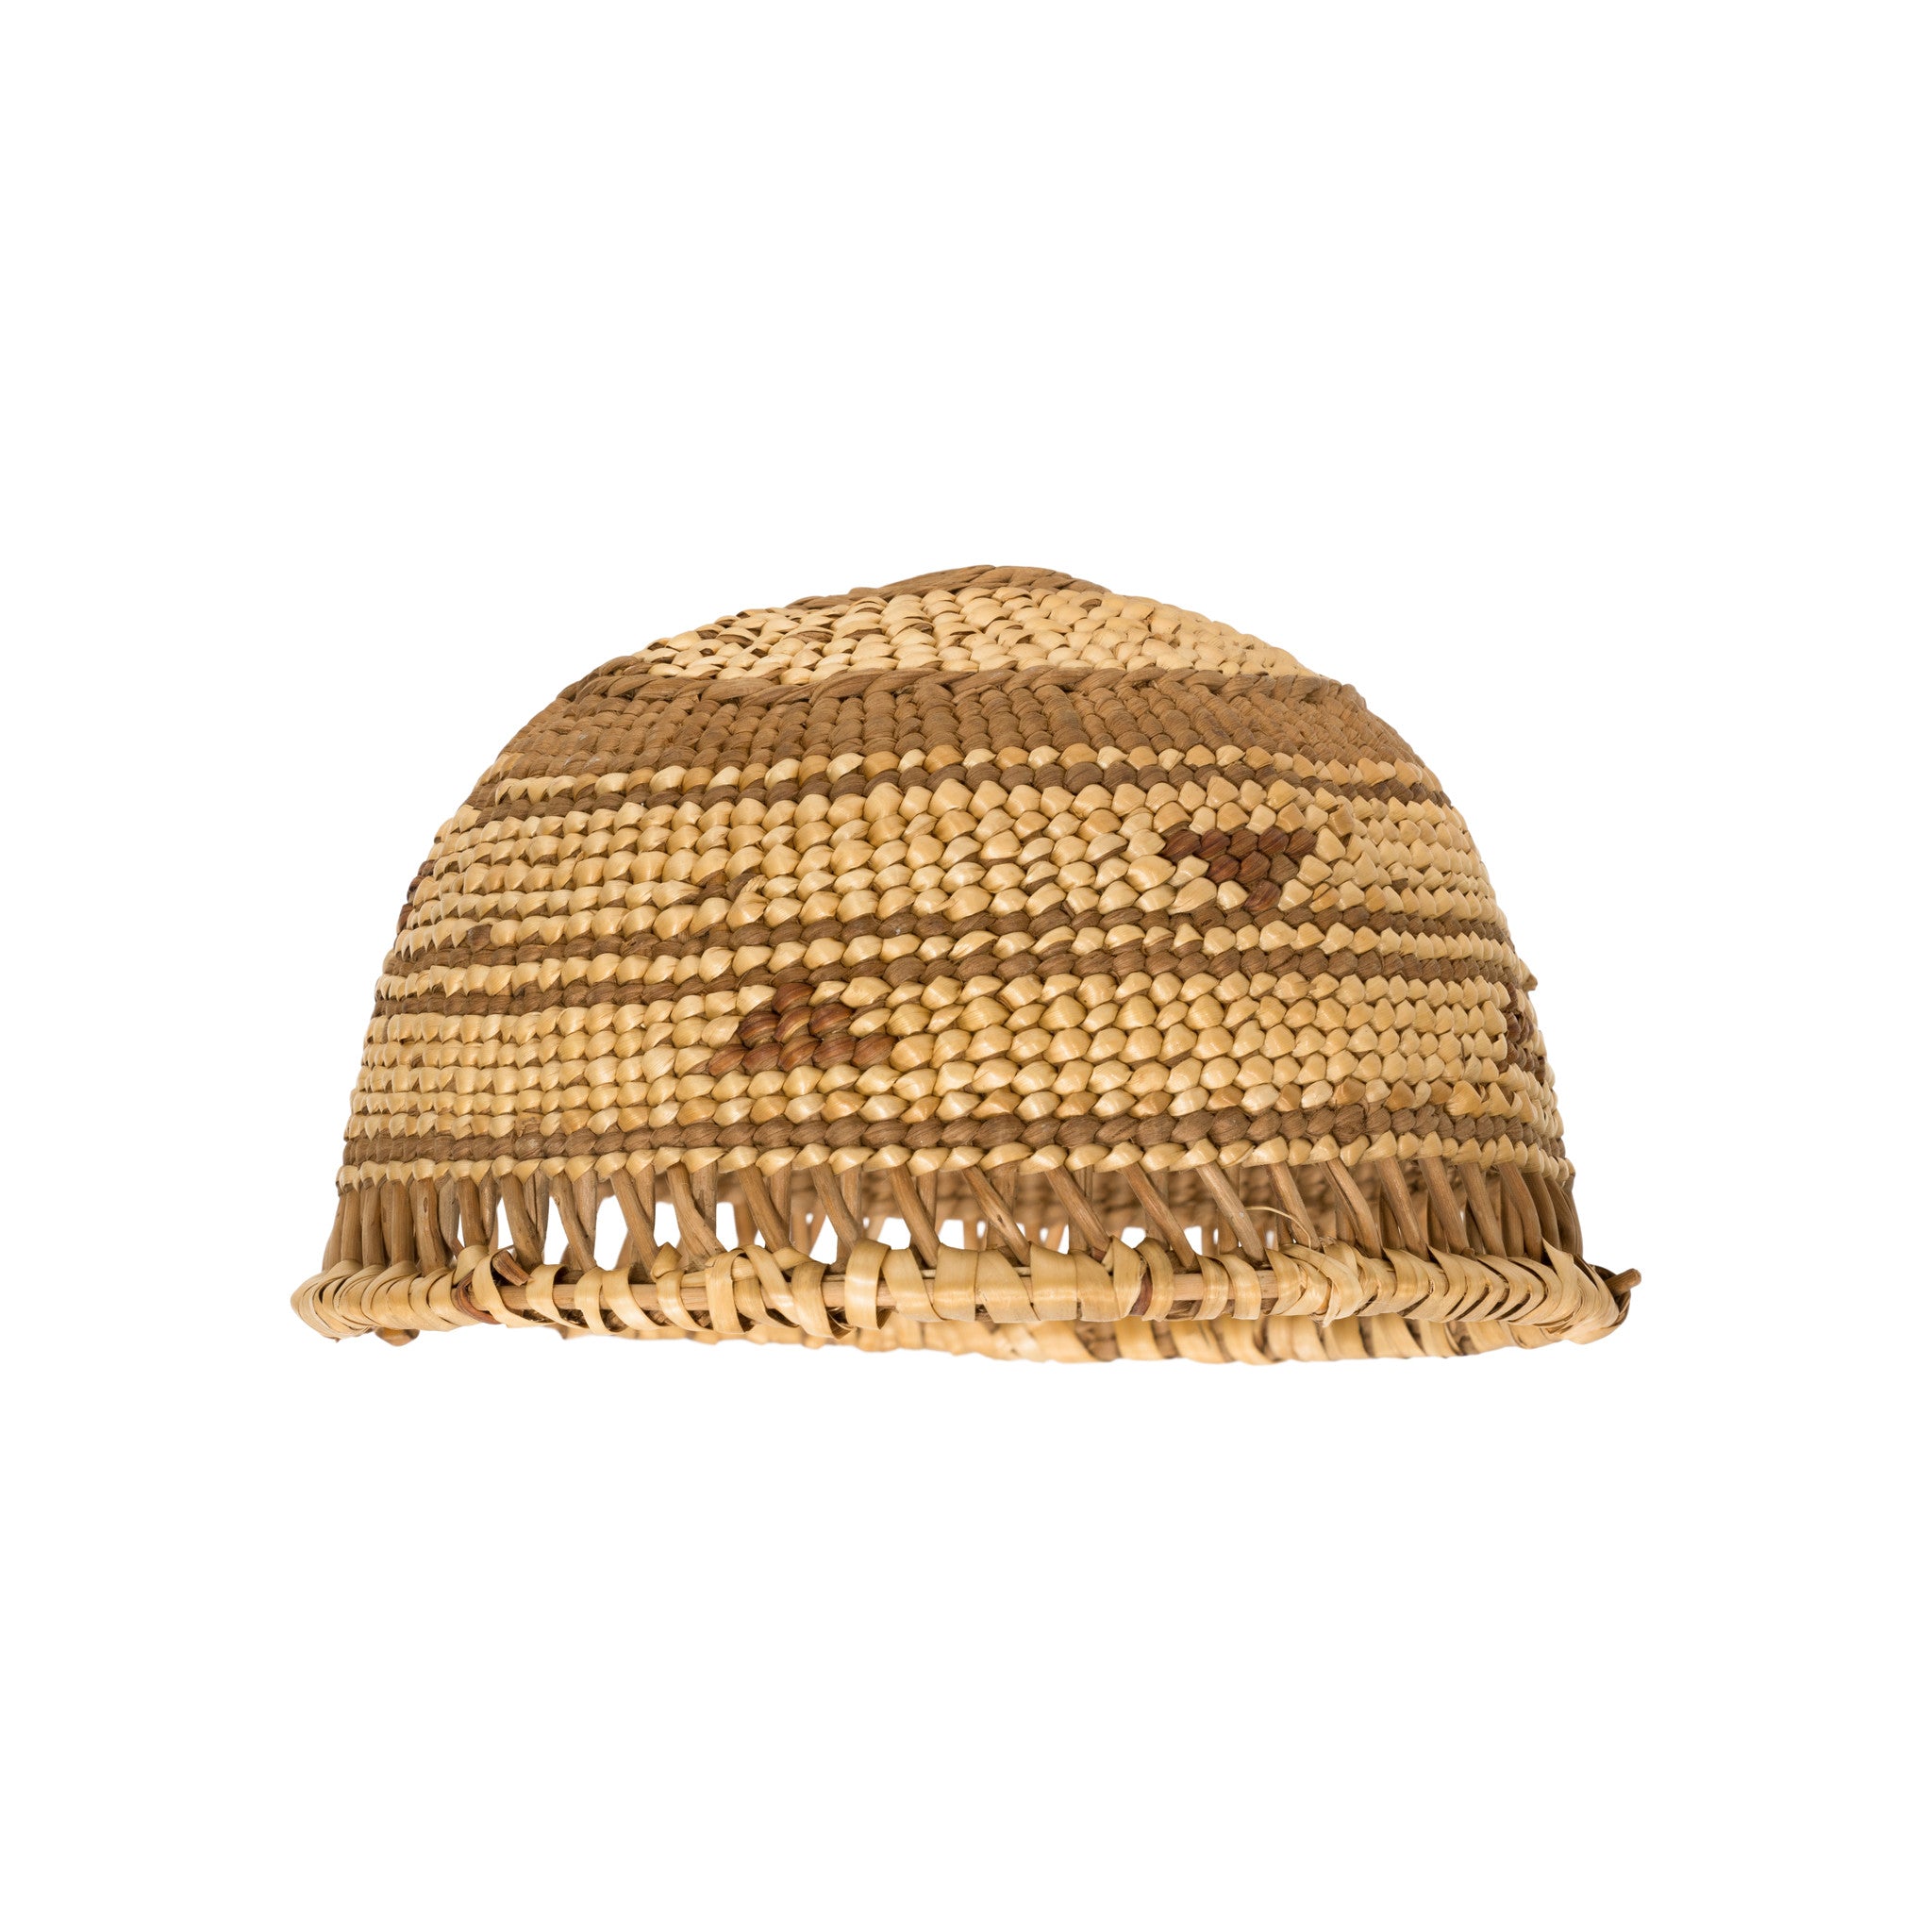 Hupa Child's Hat Basket